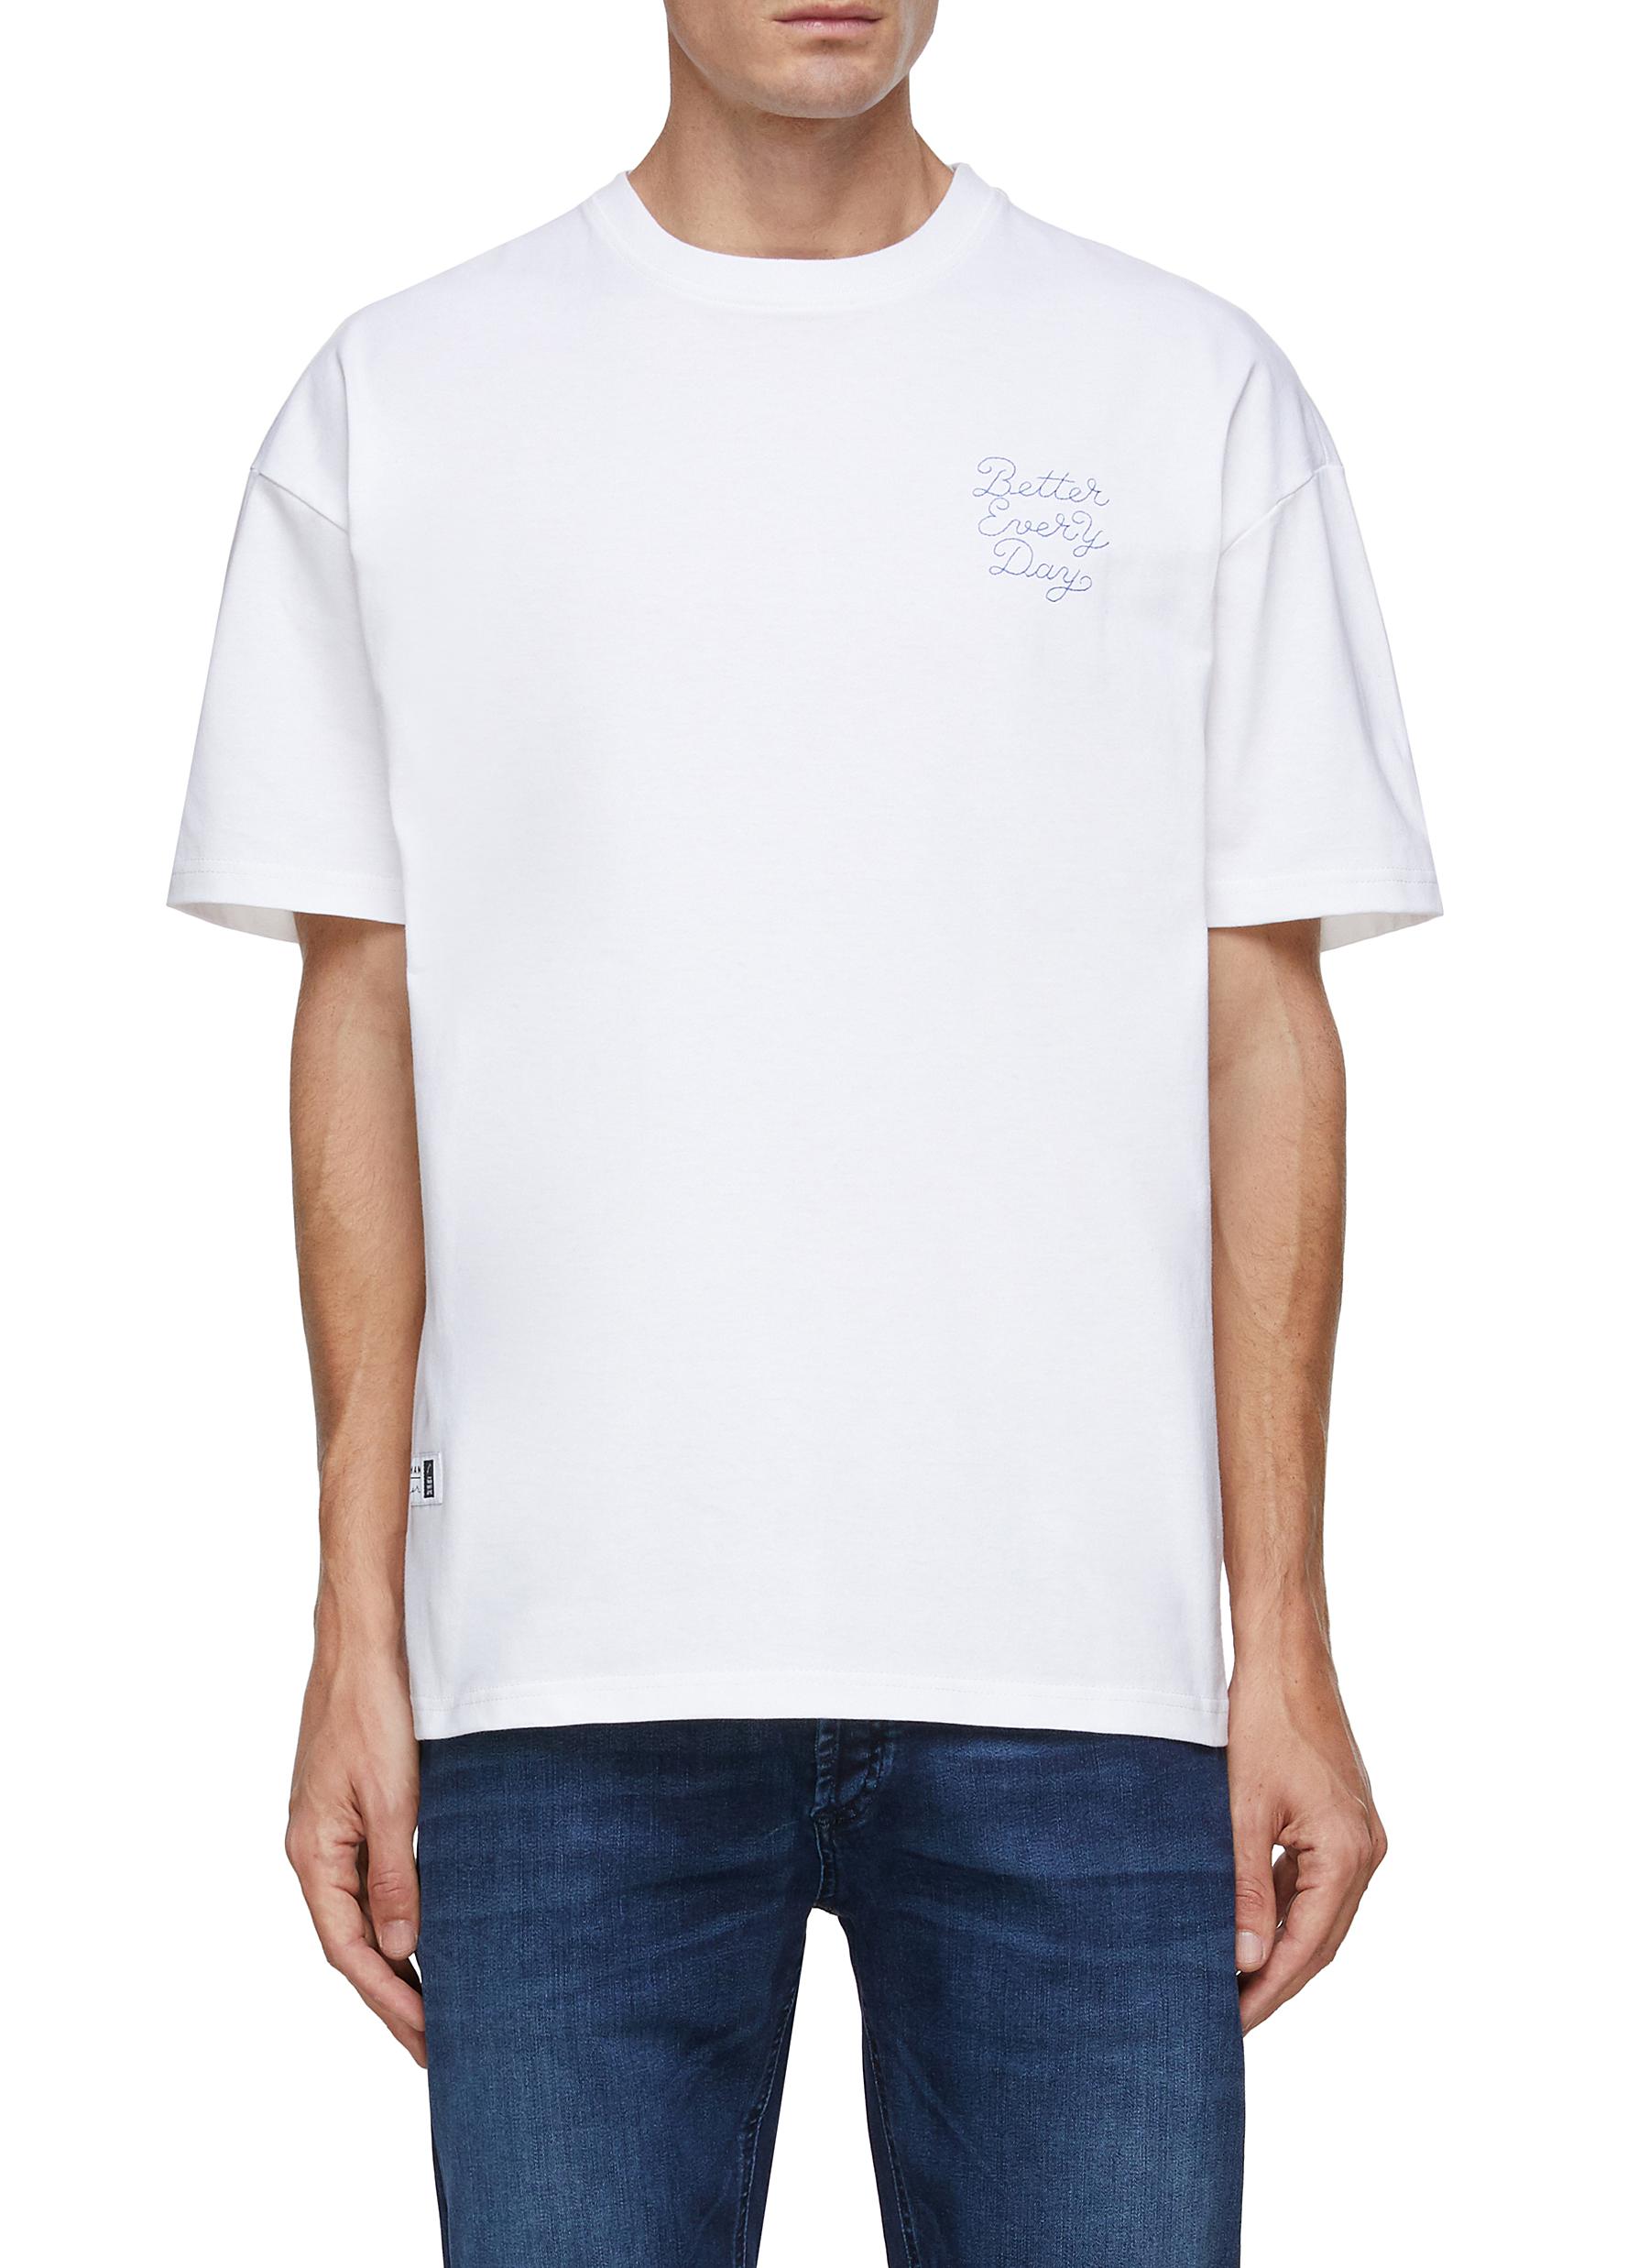 DENHAM x Pieter Ceizer ‘Better Every Day' Slogan Embroidery Graphic Print Cotton T-Shirt